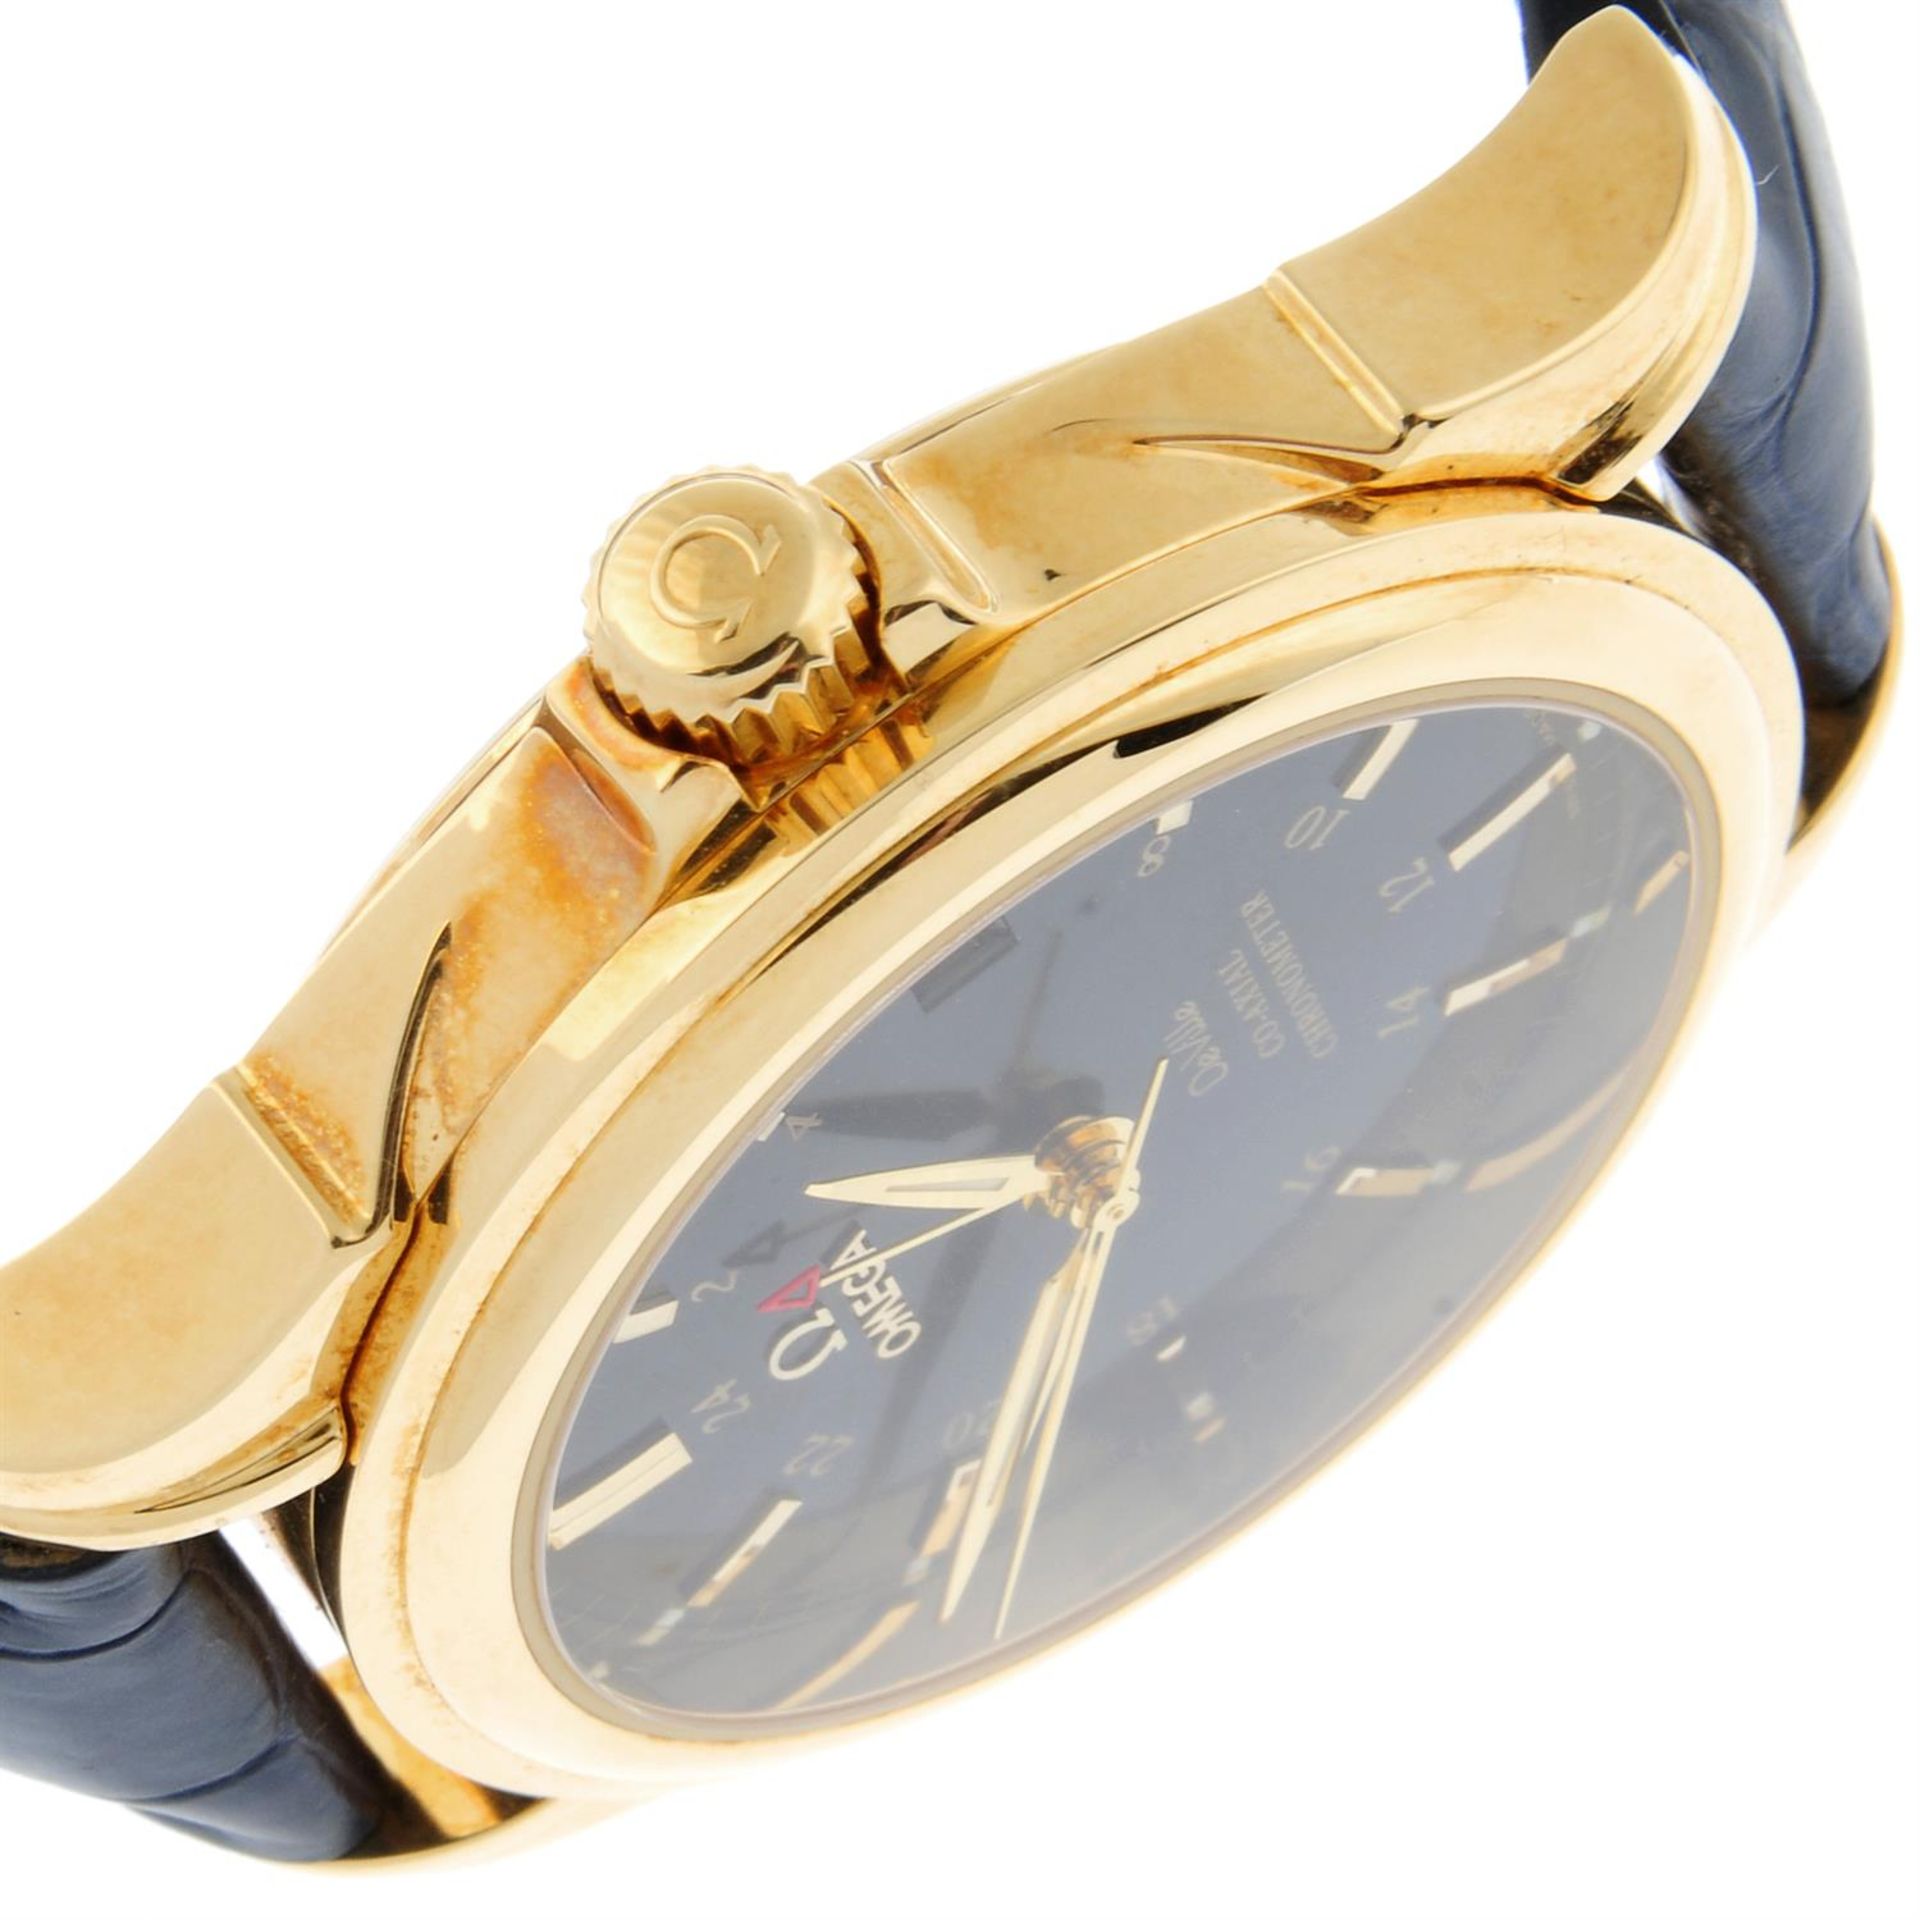 Omega - a De Ville GMT watch, 39mm. - Image 3 of 7